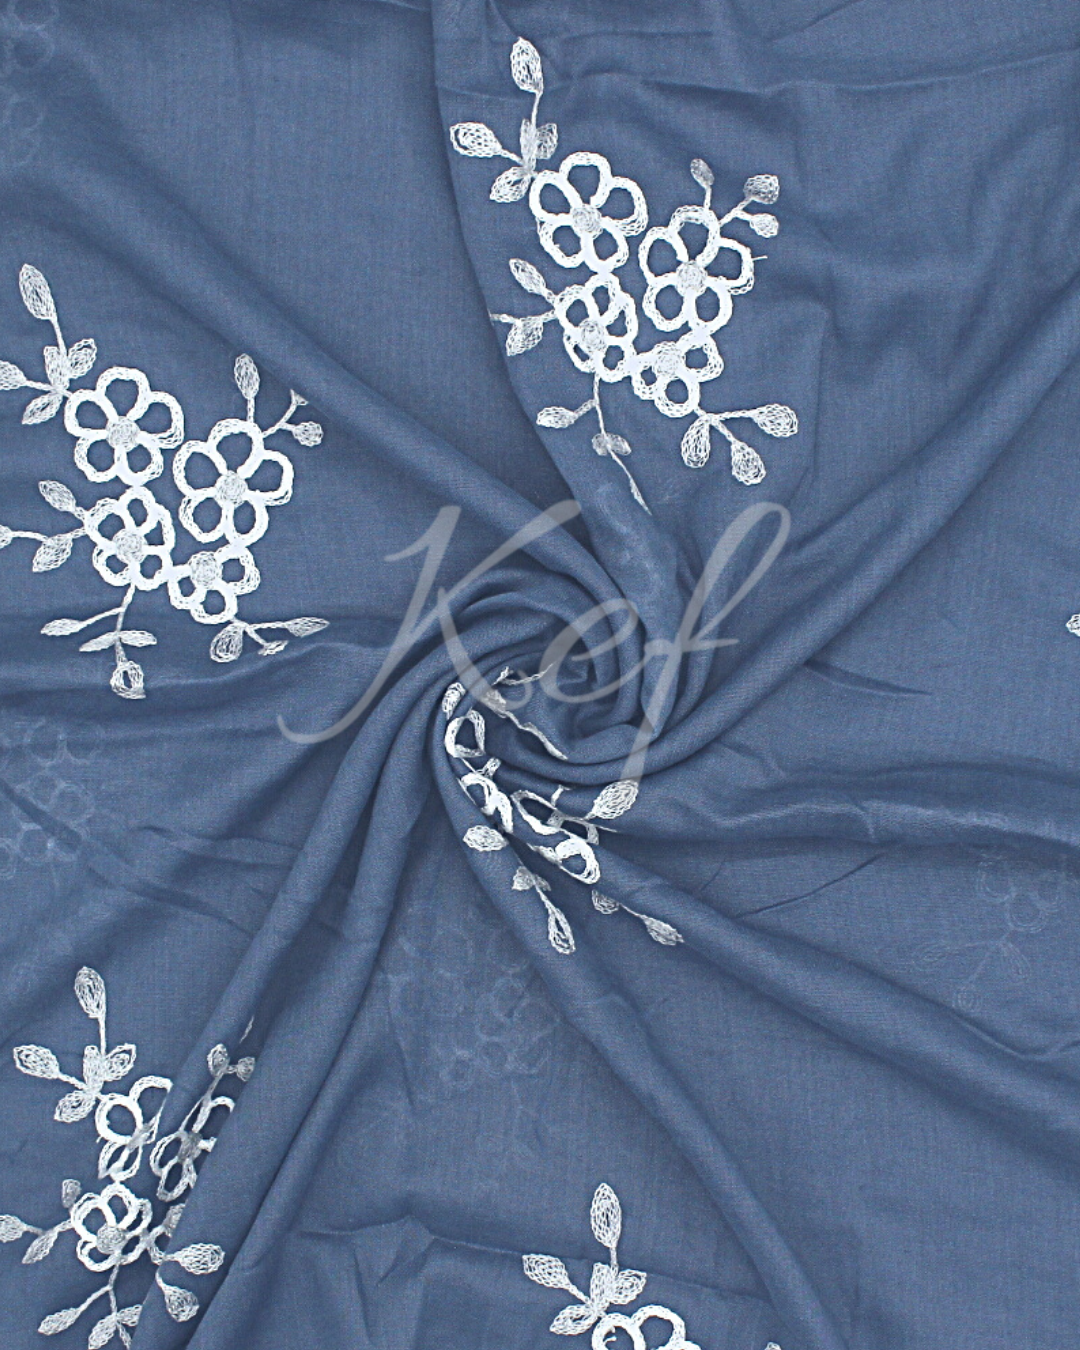 Alyssum Embroidery Lawn Hijab - Airforce blue